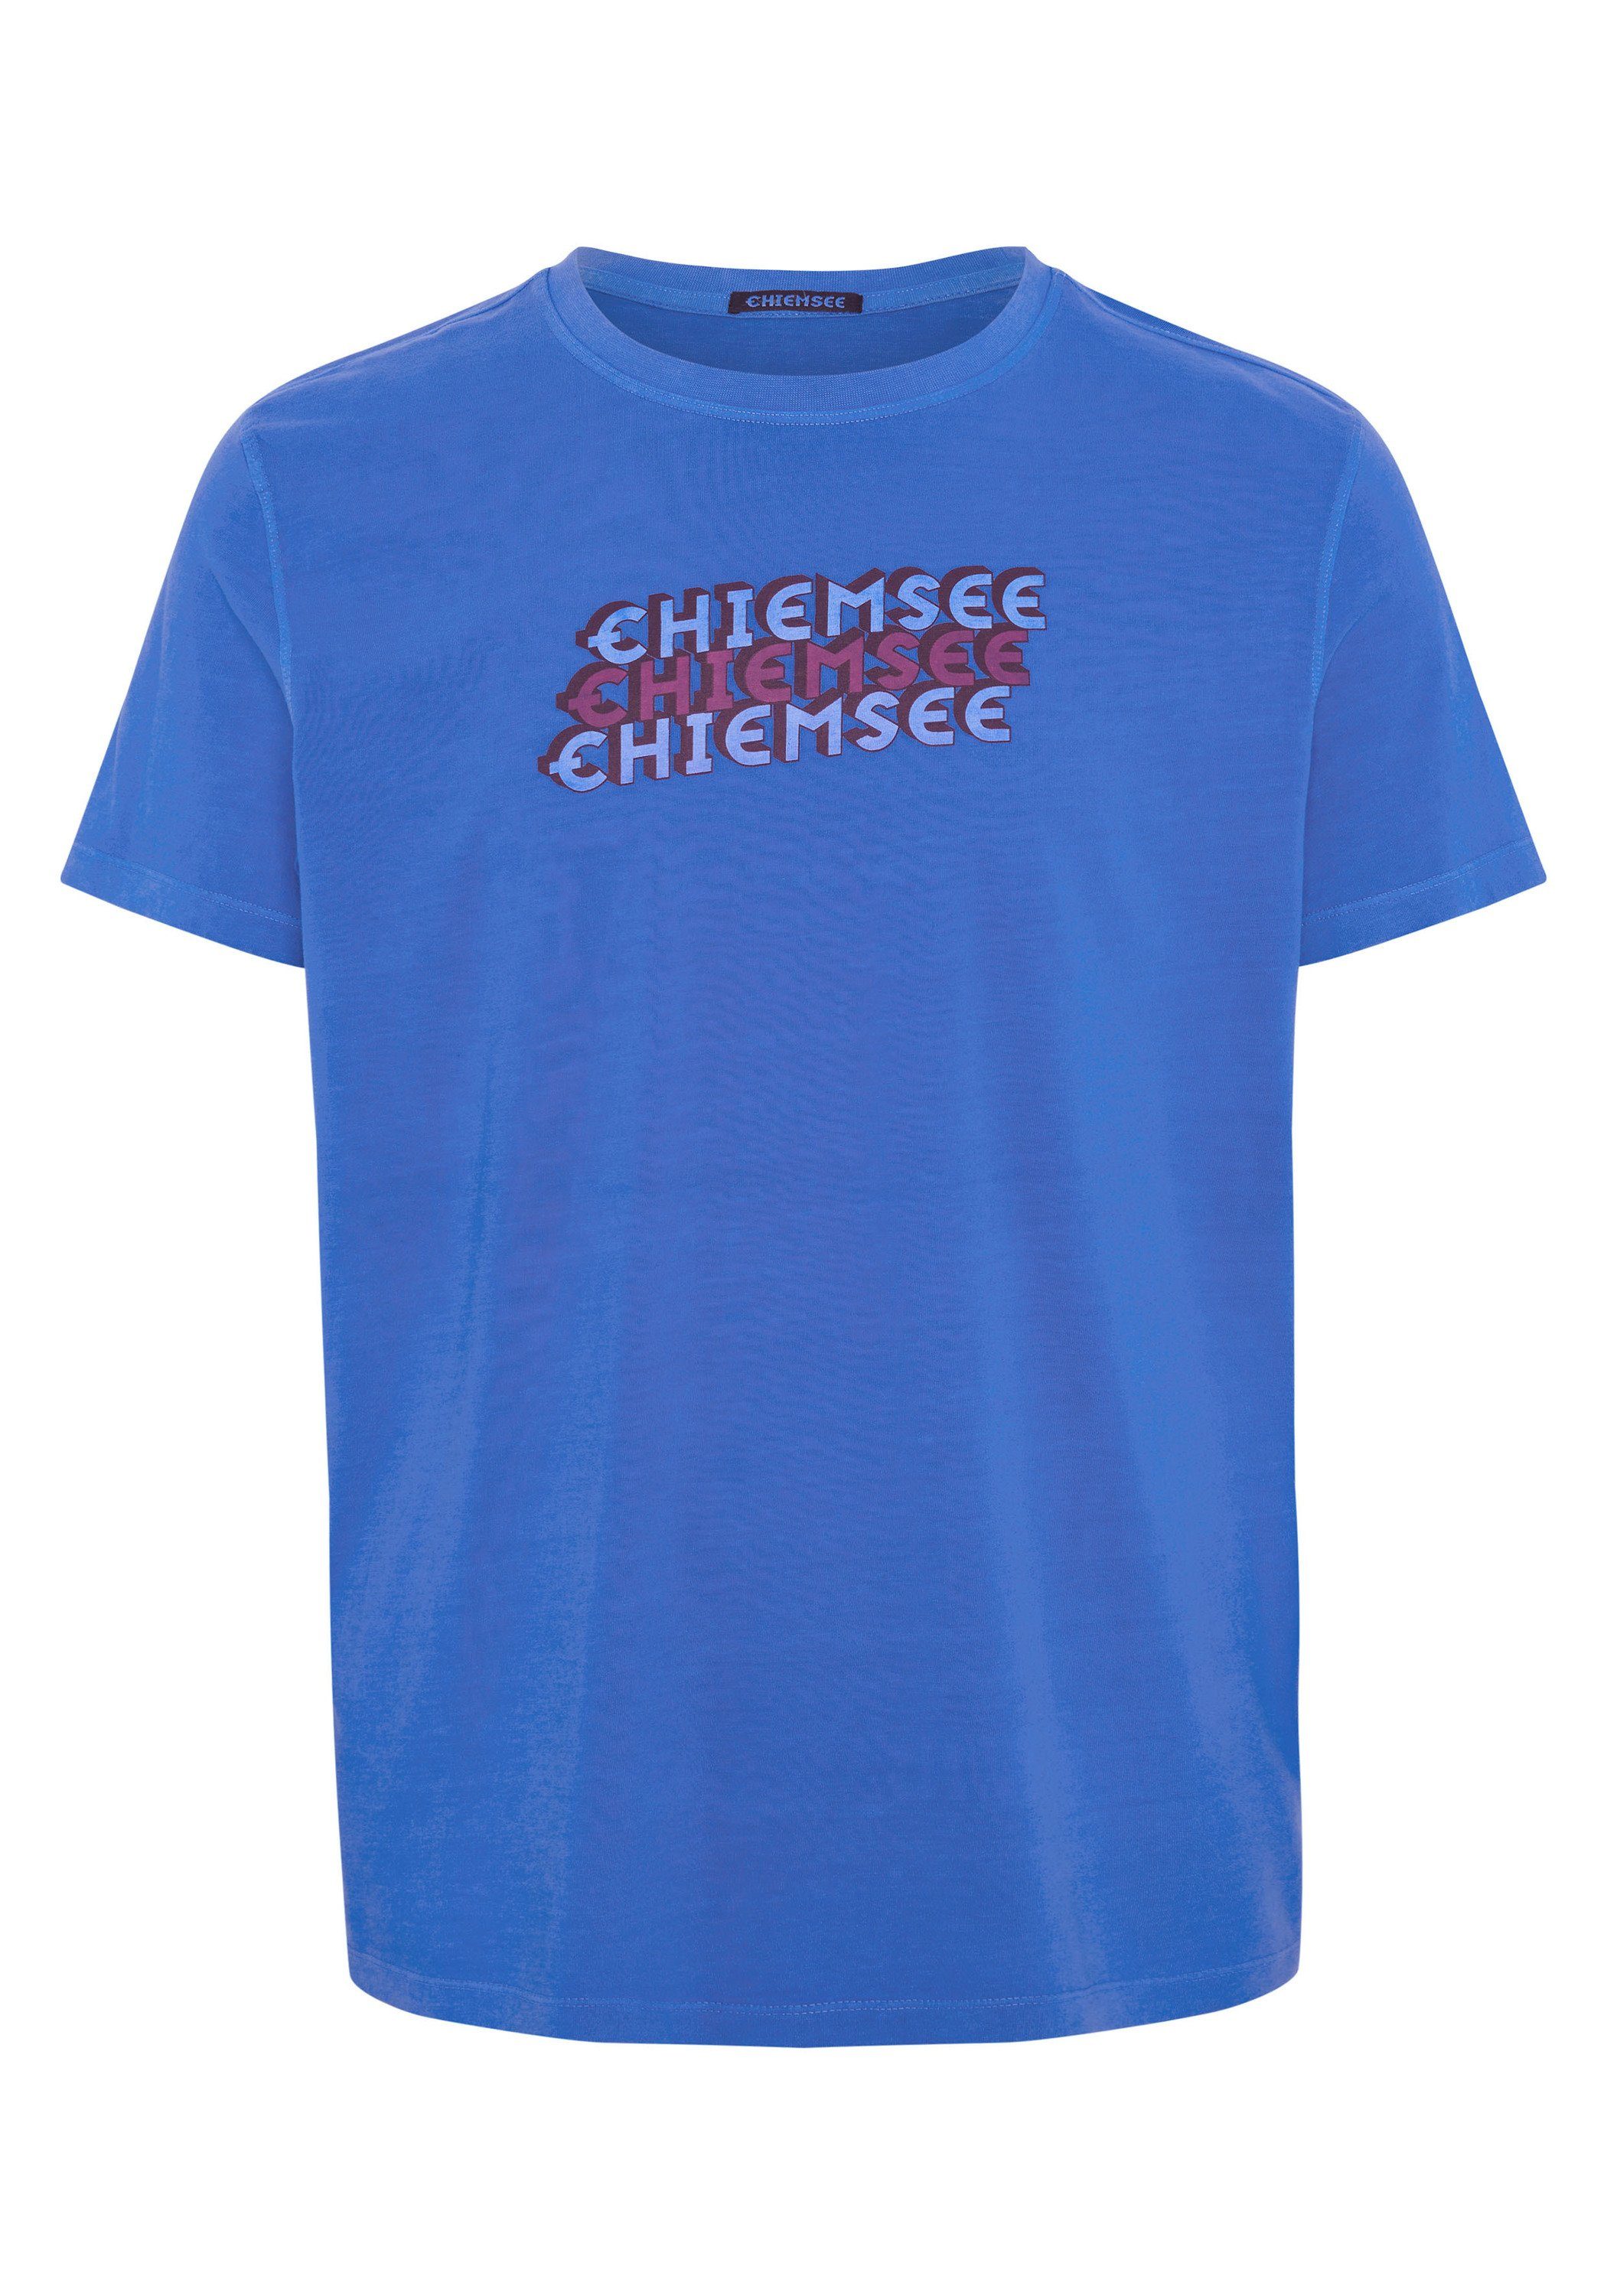 Chiemsee Print-Shirt T-Shirt aus Baumwolljersey Herren-Shirt 1, Label-Design CHIEMSEE im